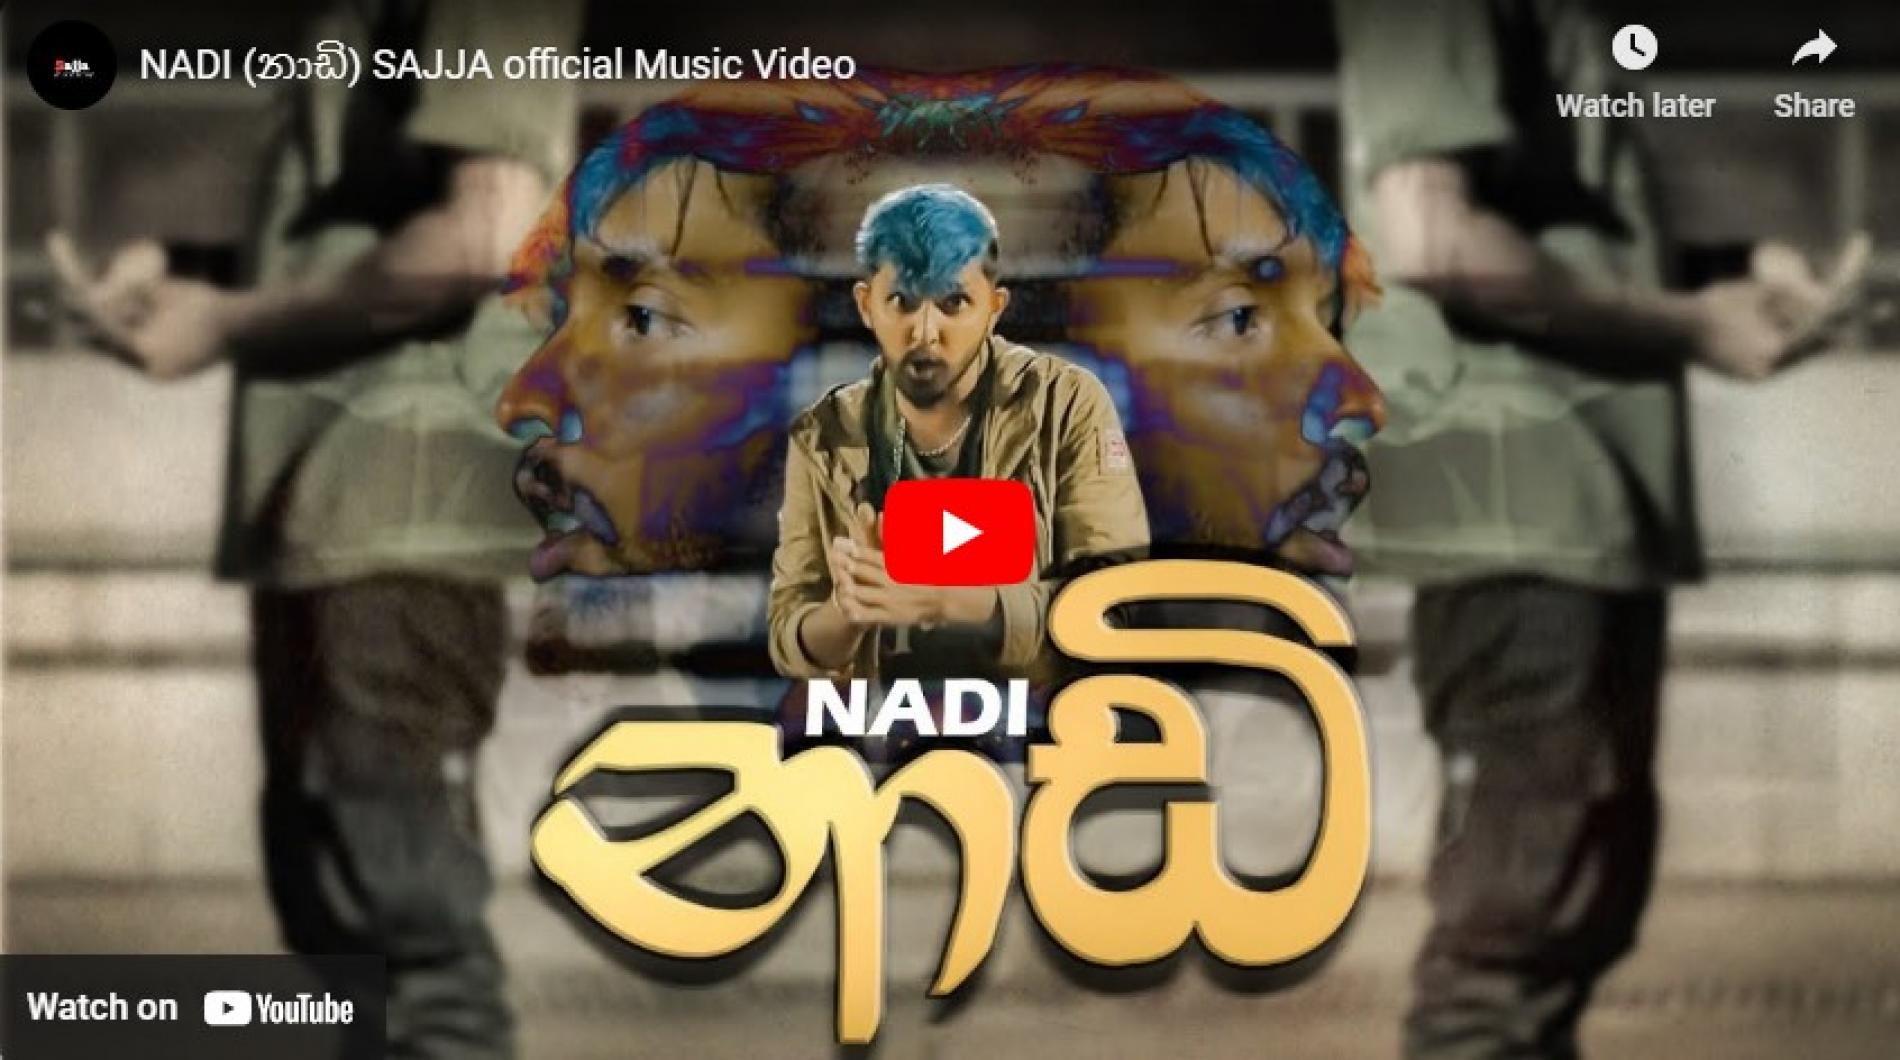 New Music : NADI (නාඩි) SAJJA official Music Video